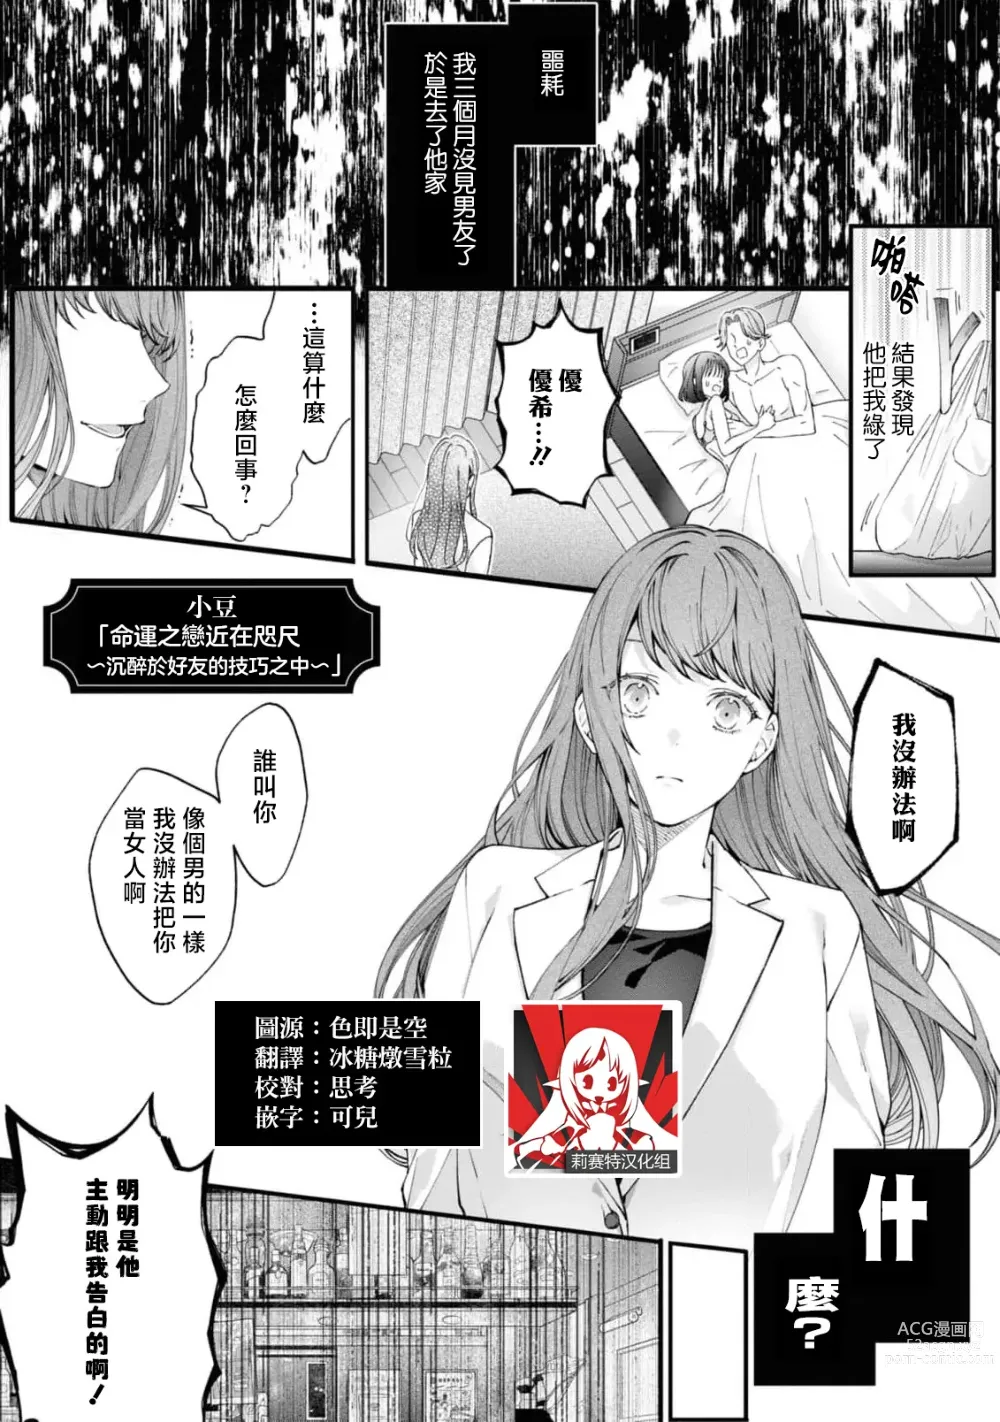 Page 1 of manga 「命运之恋近在咫尺～沉醉于好友的技巧之中～」